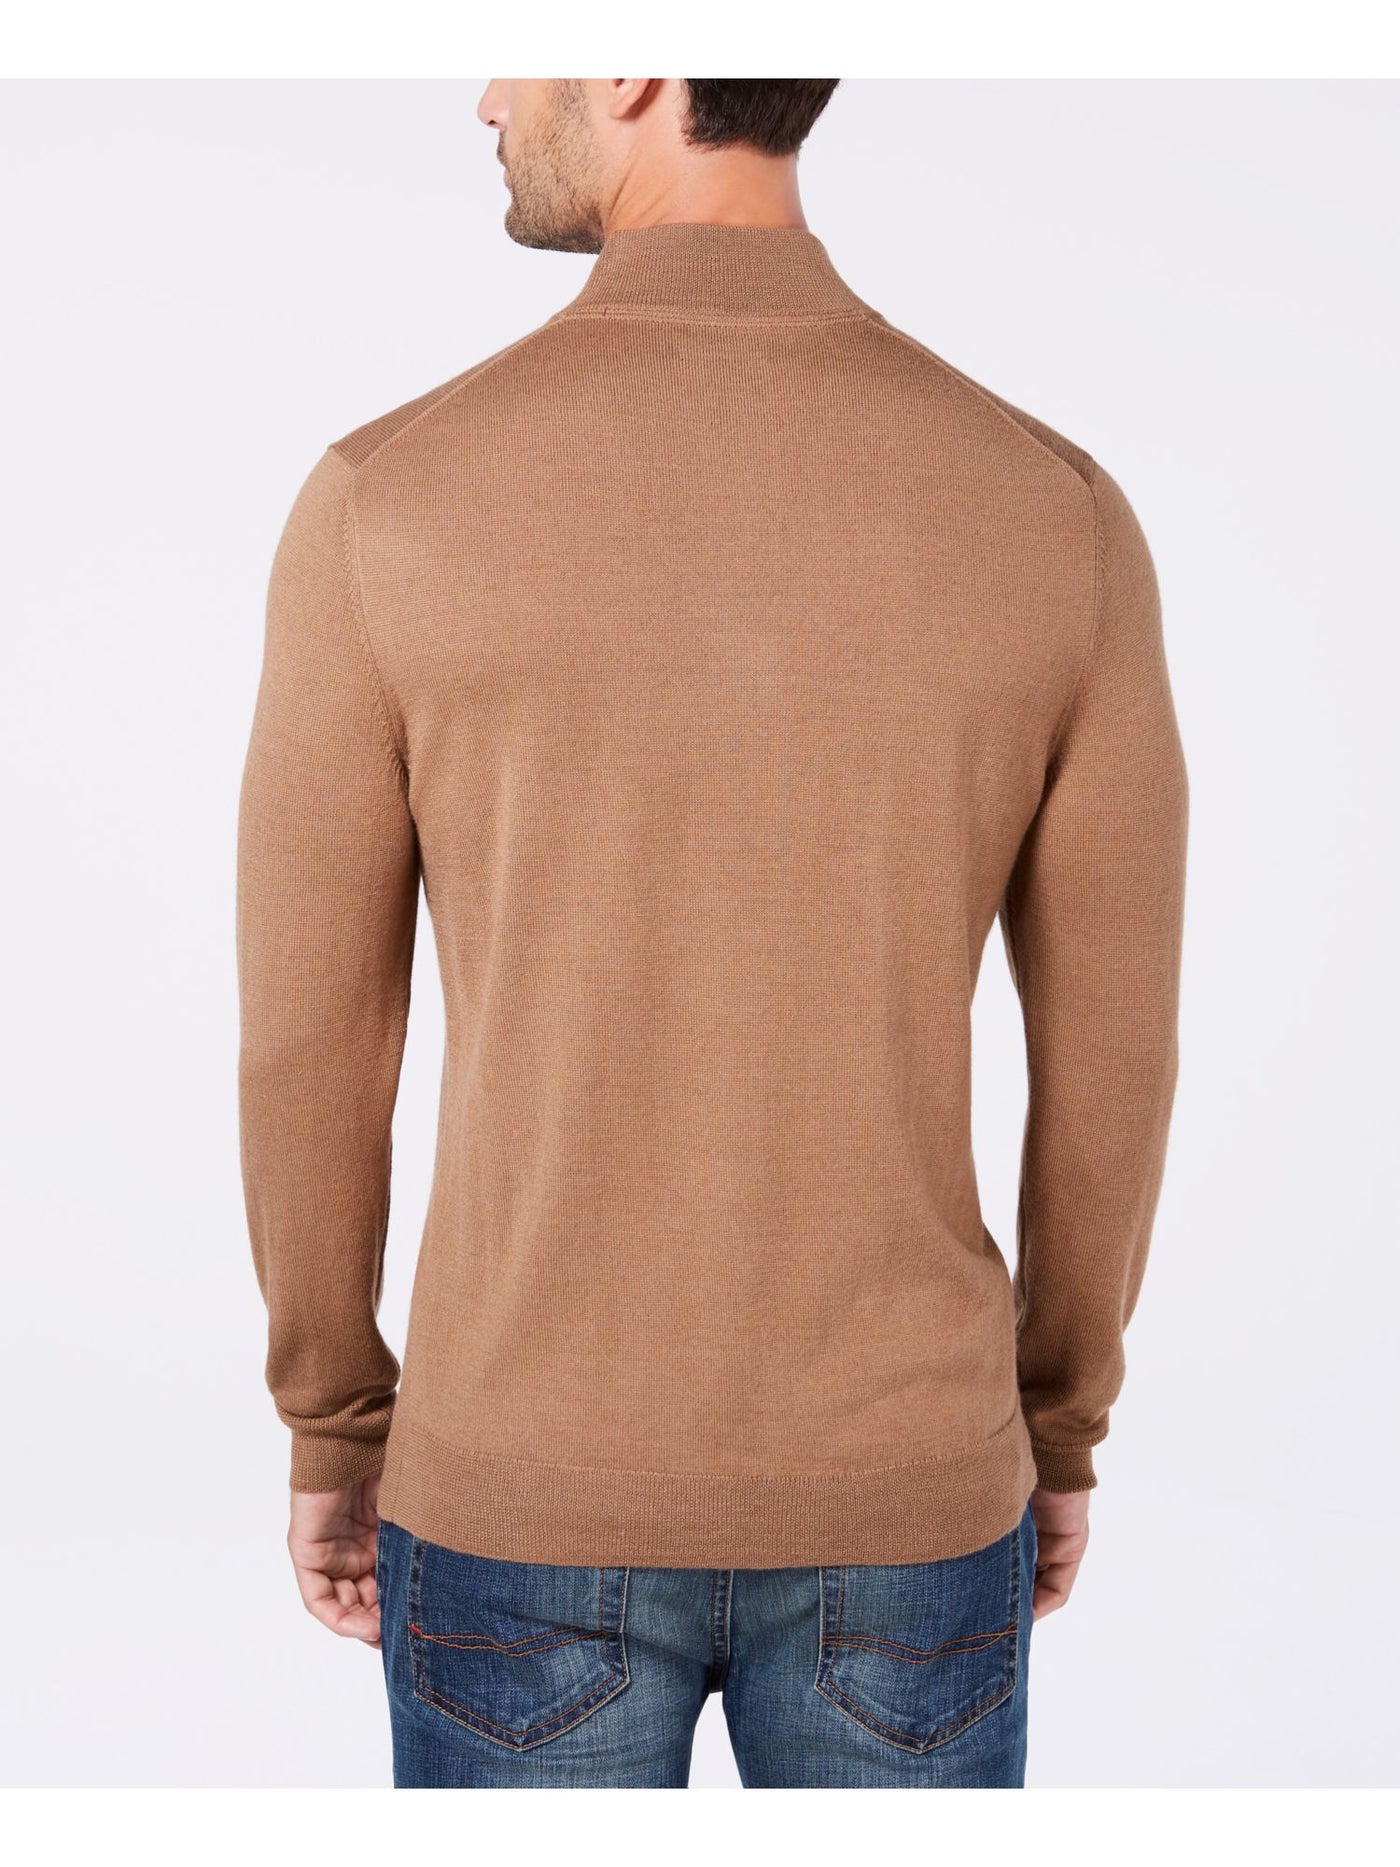 CLUBROOM Mens Brown Quarter-Zip Wool Blend Pullover Sweater S